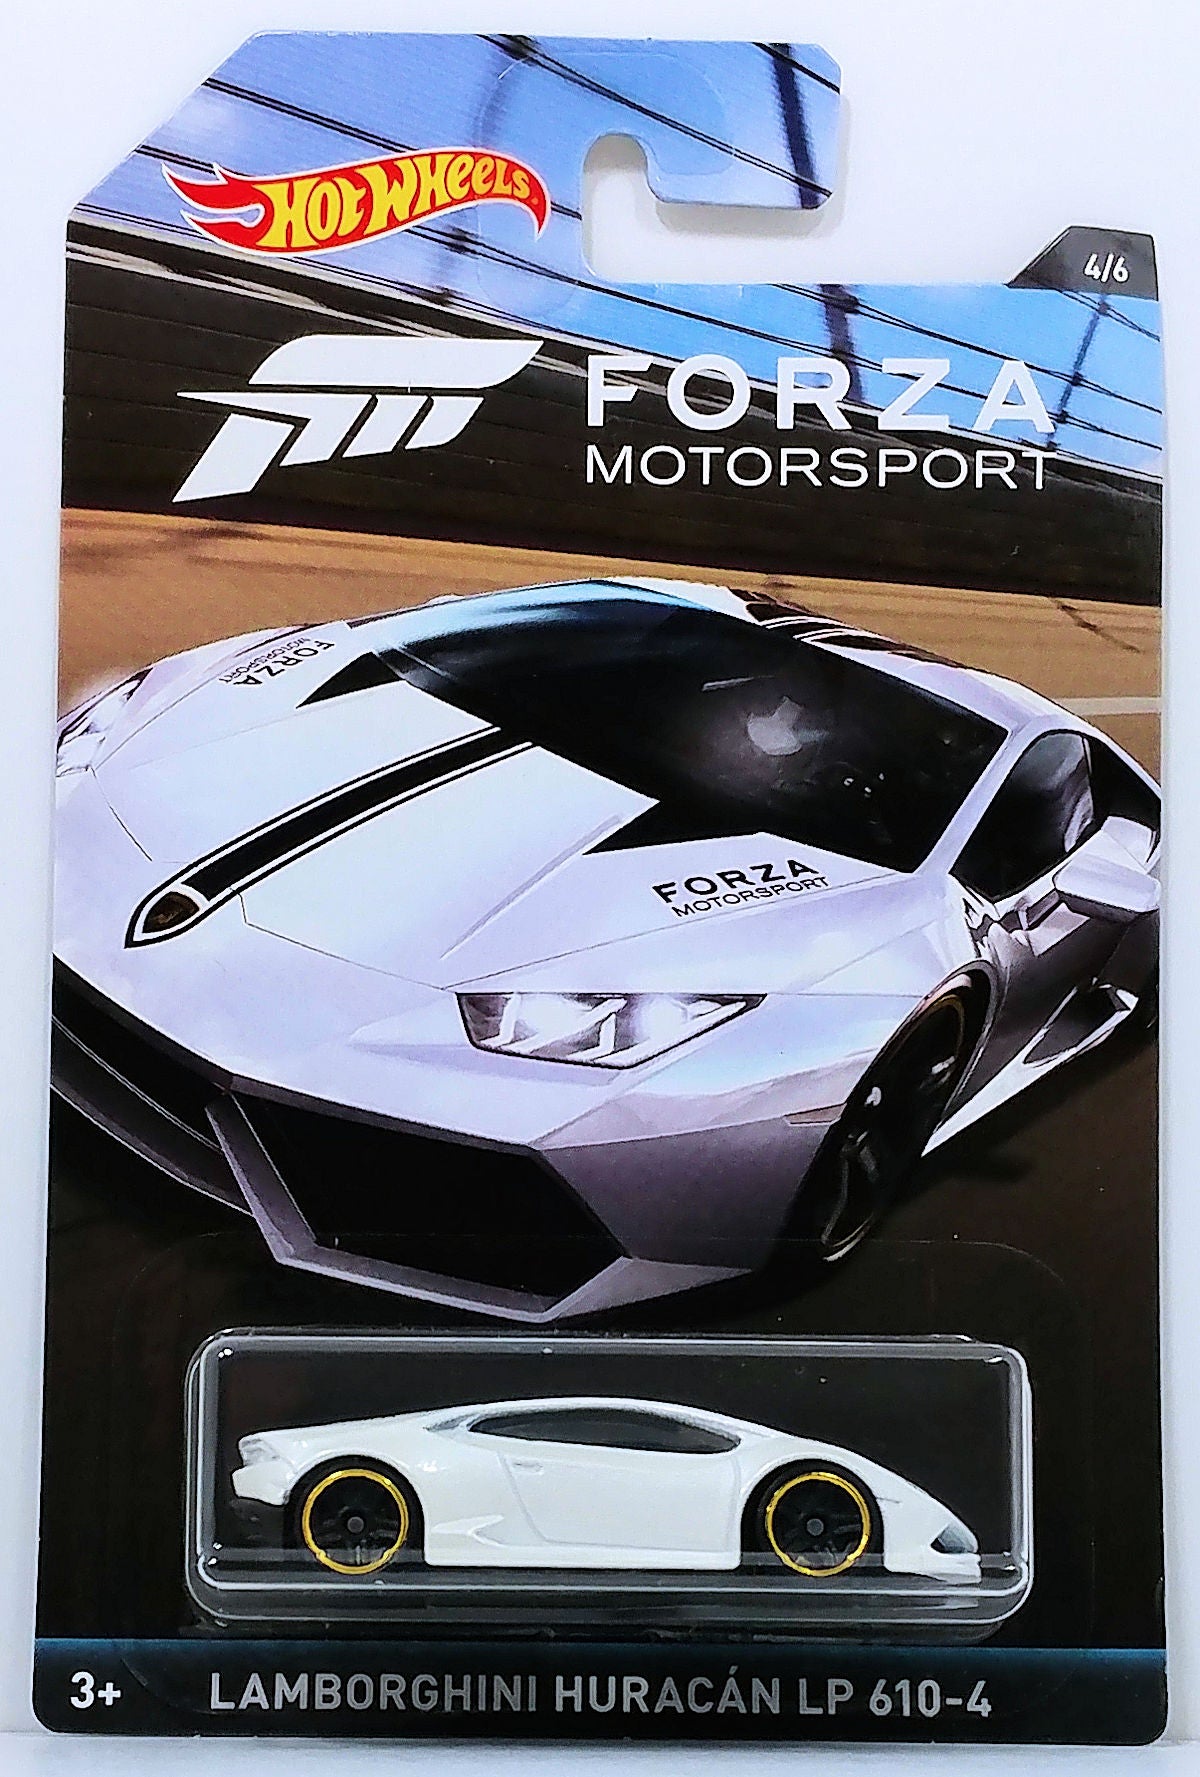 Hot Wheels 2017 - Forza Motorsport # 4/6 - Lamborghini Huracán LP 610-4 - White - Walmart Exclusive